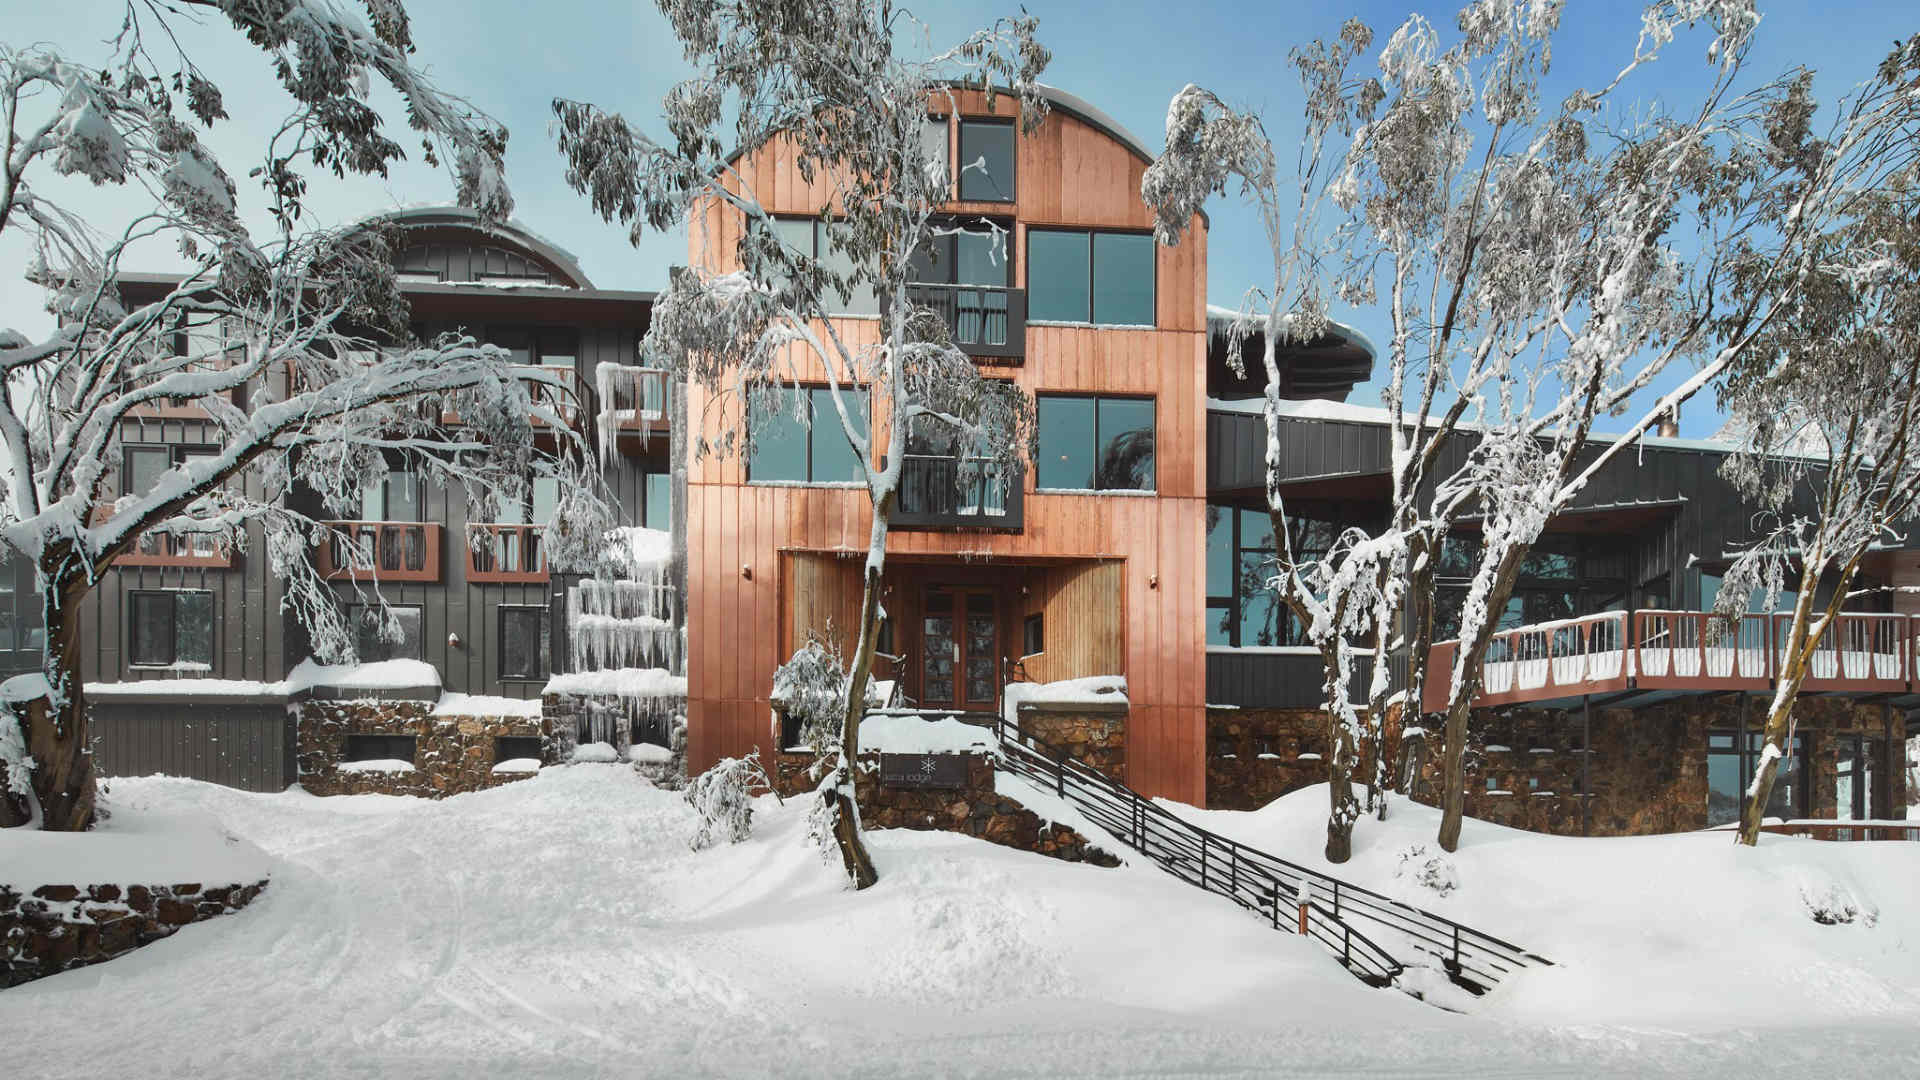 A Look Inside Falls Creek's Luxe New Ski Lodge